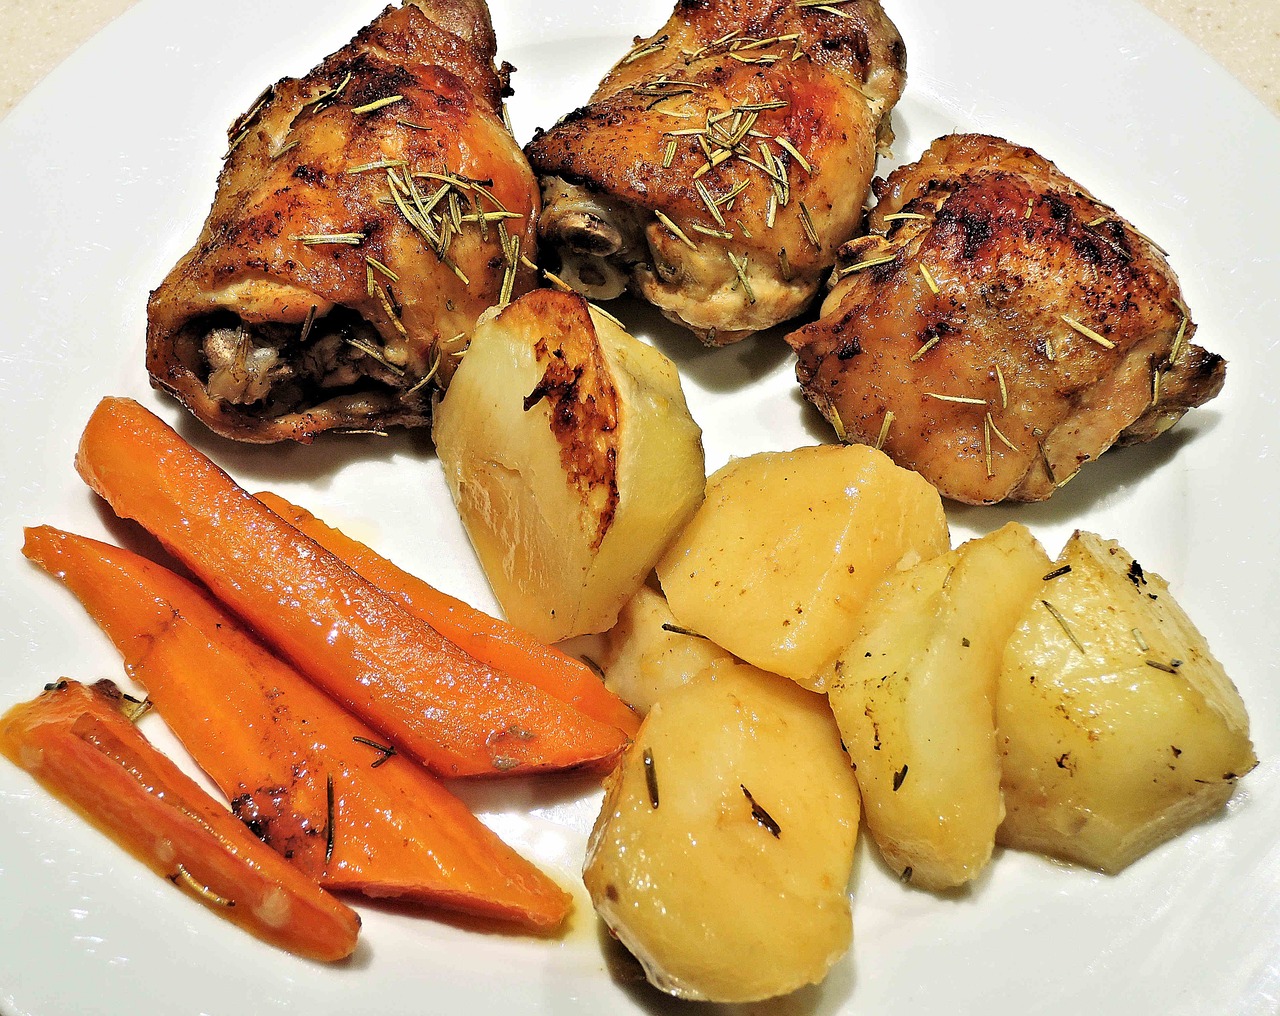 Chicken and Garlic Potatoes with Veggies